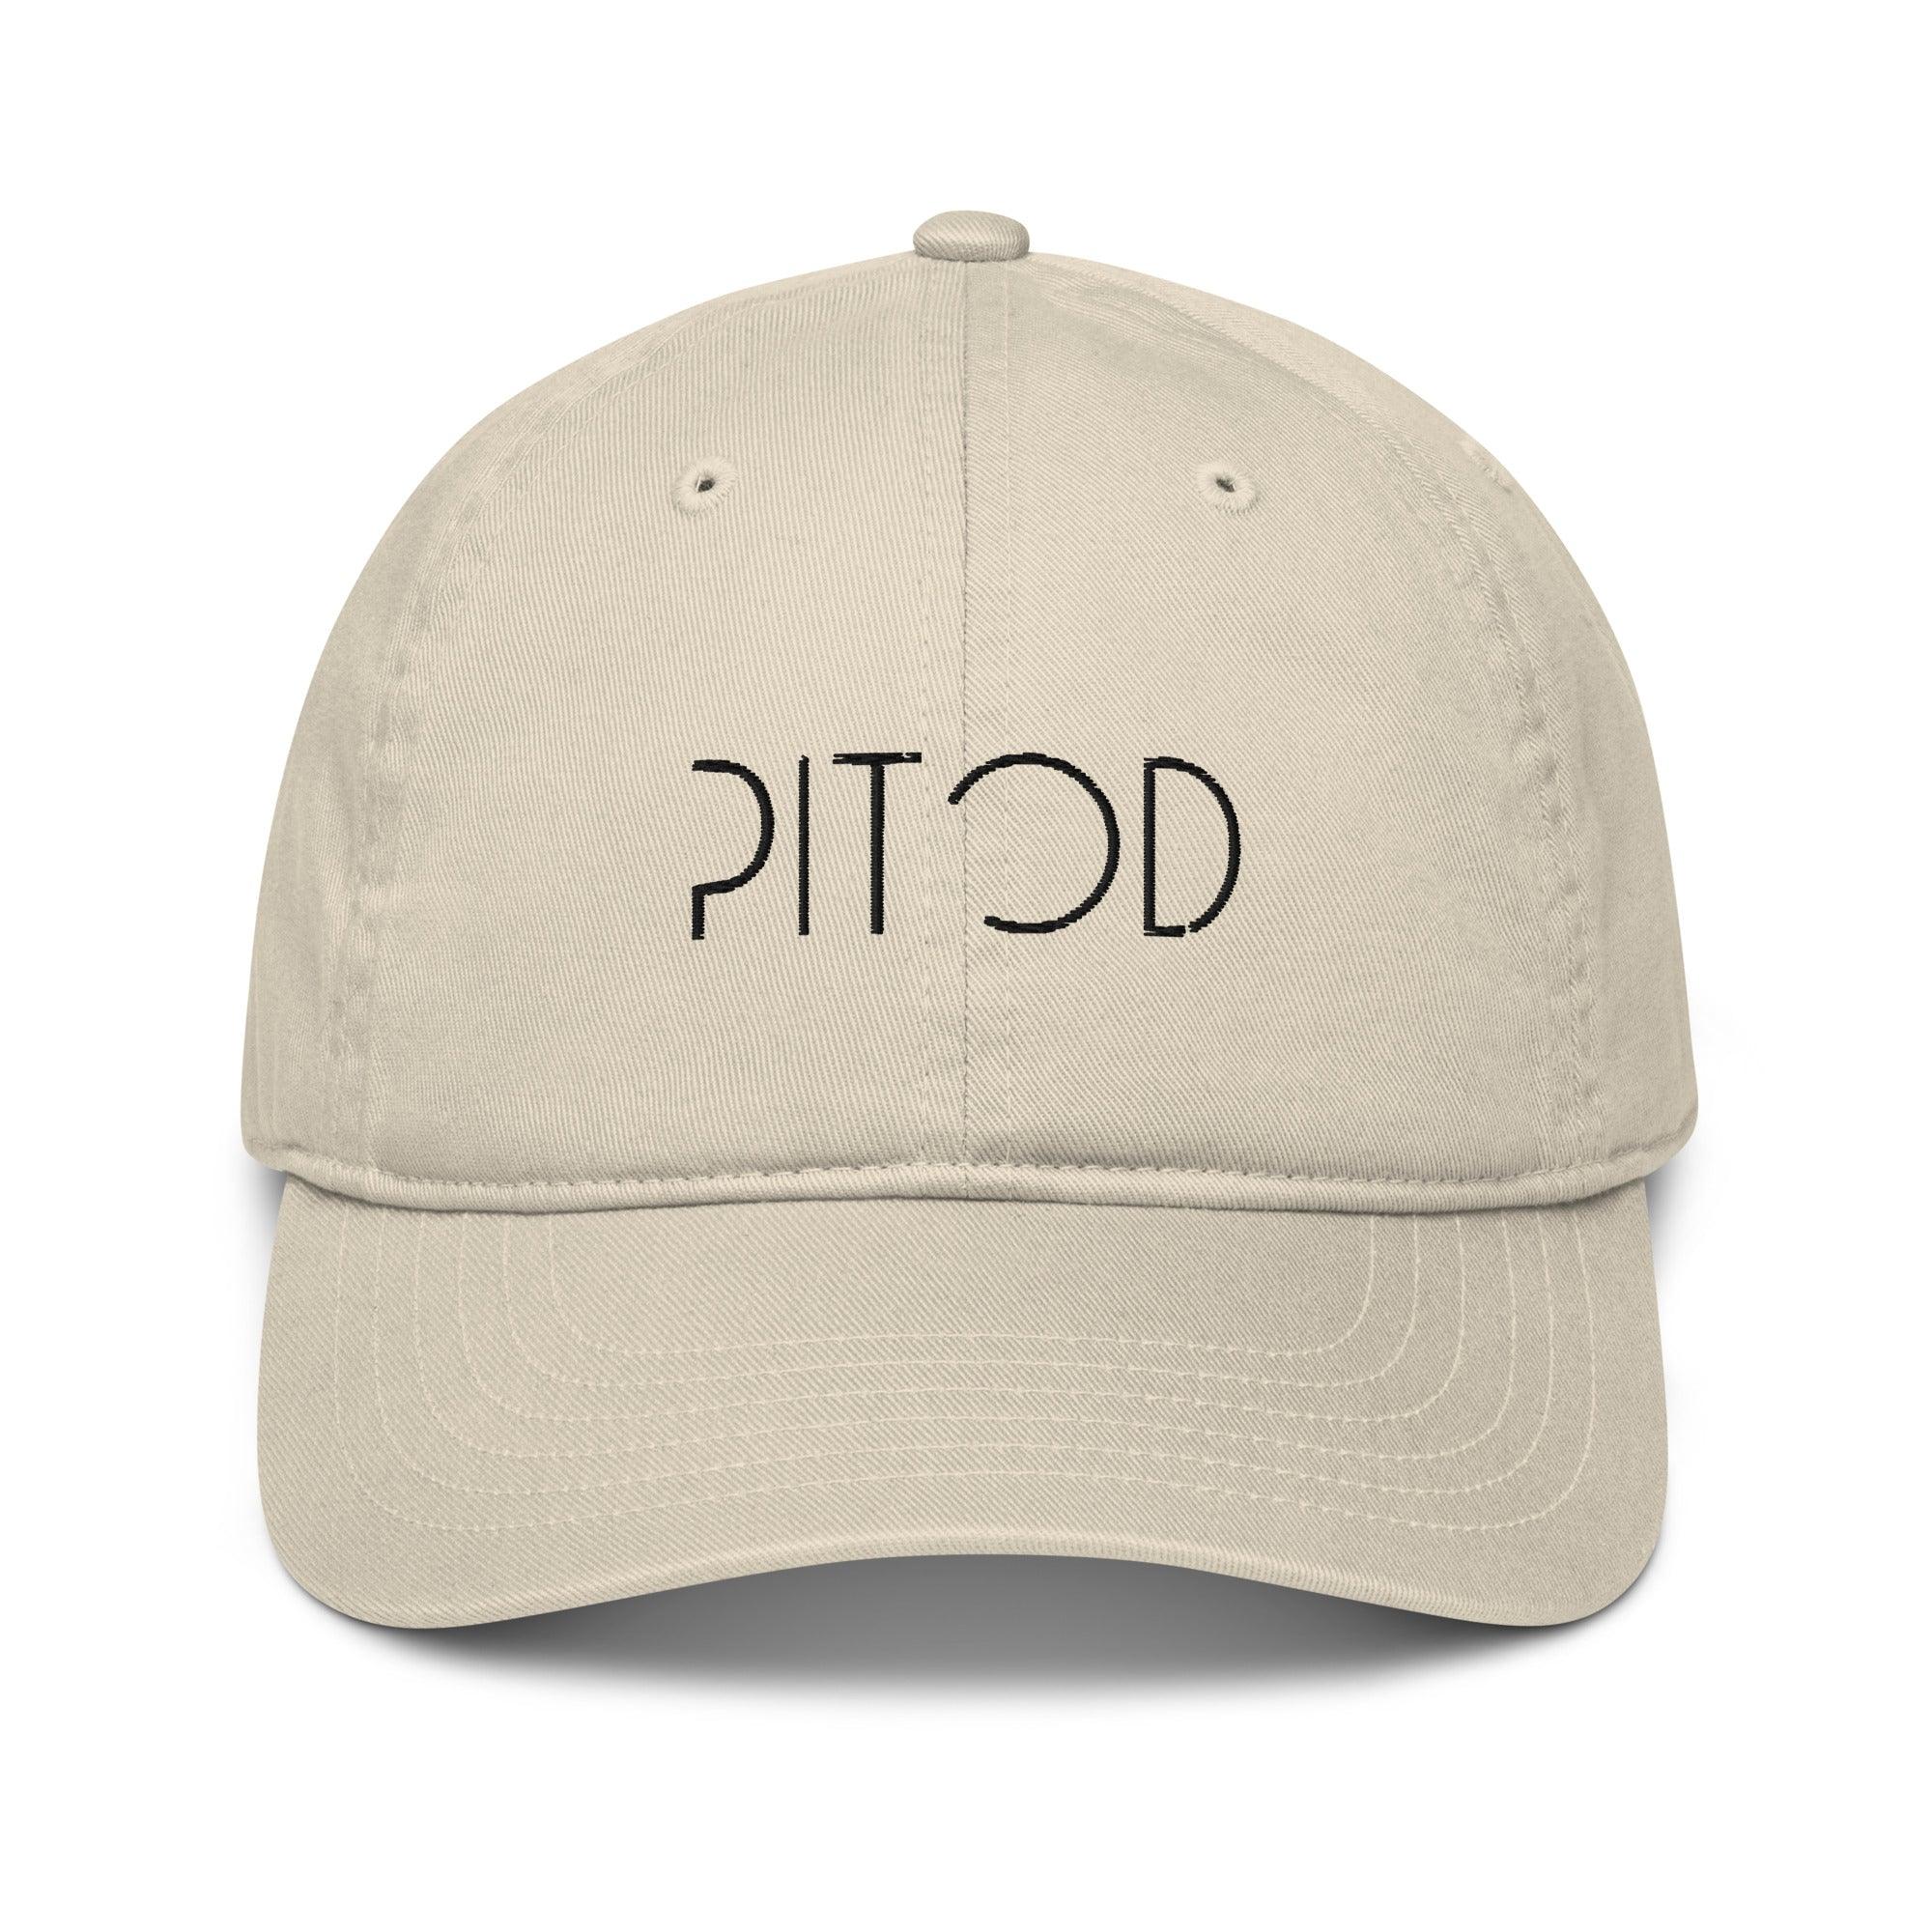 Pitod Basebal Cap | Hats | pitod.com